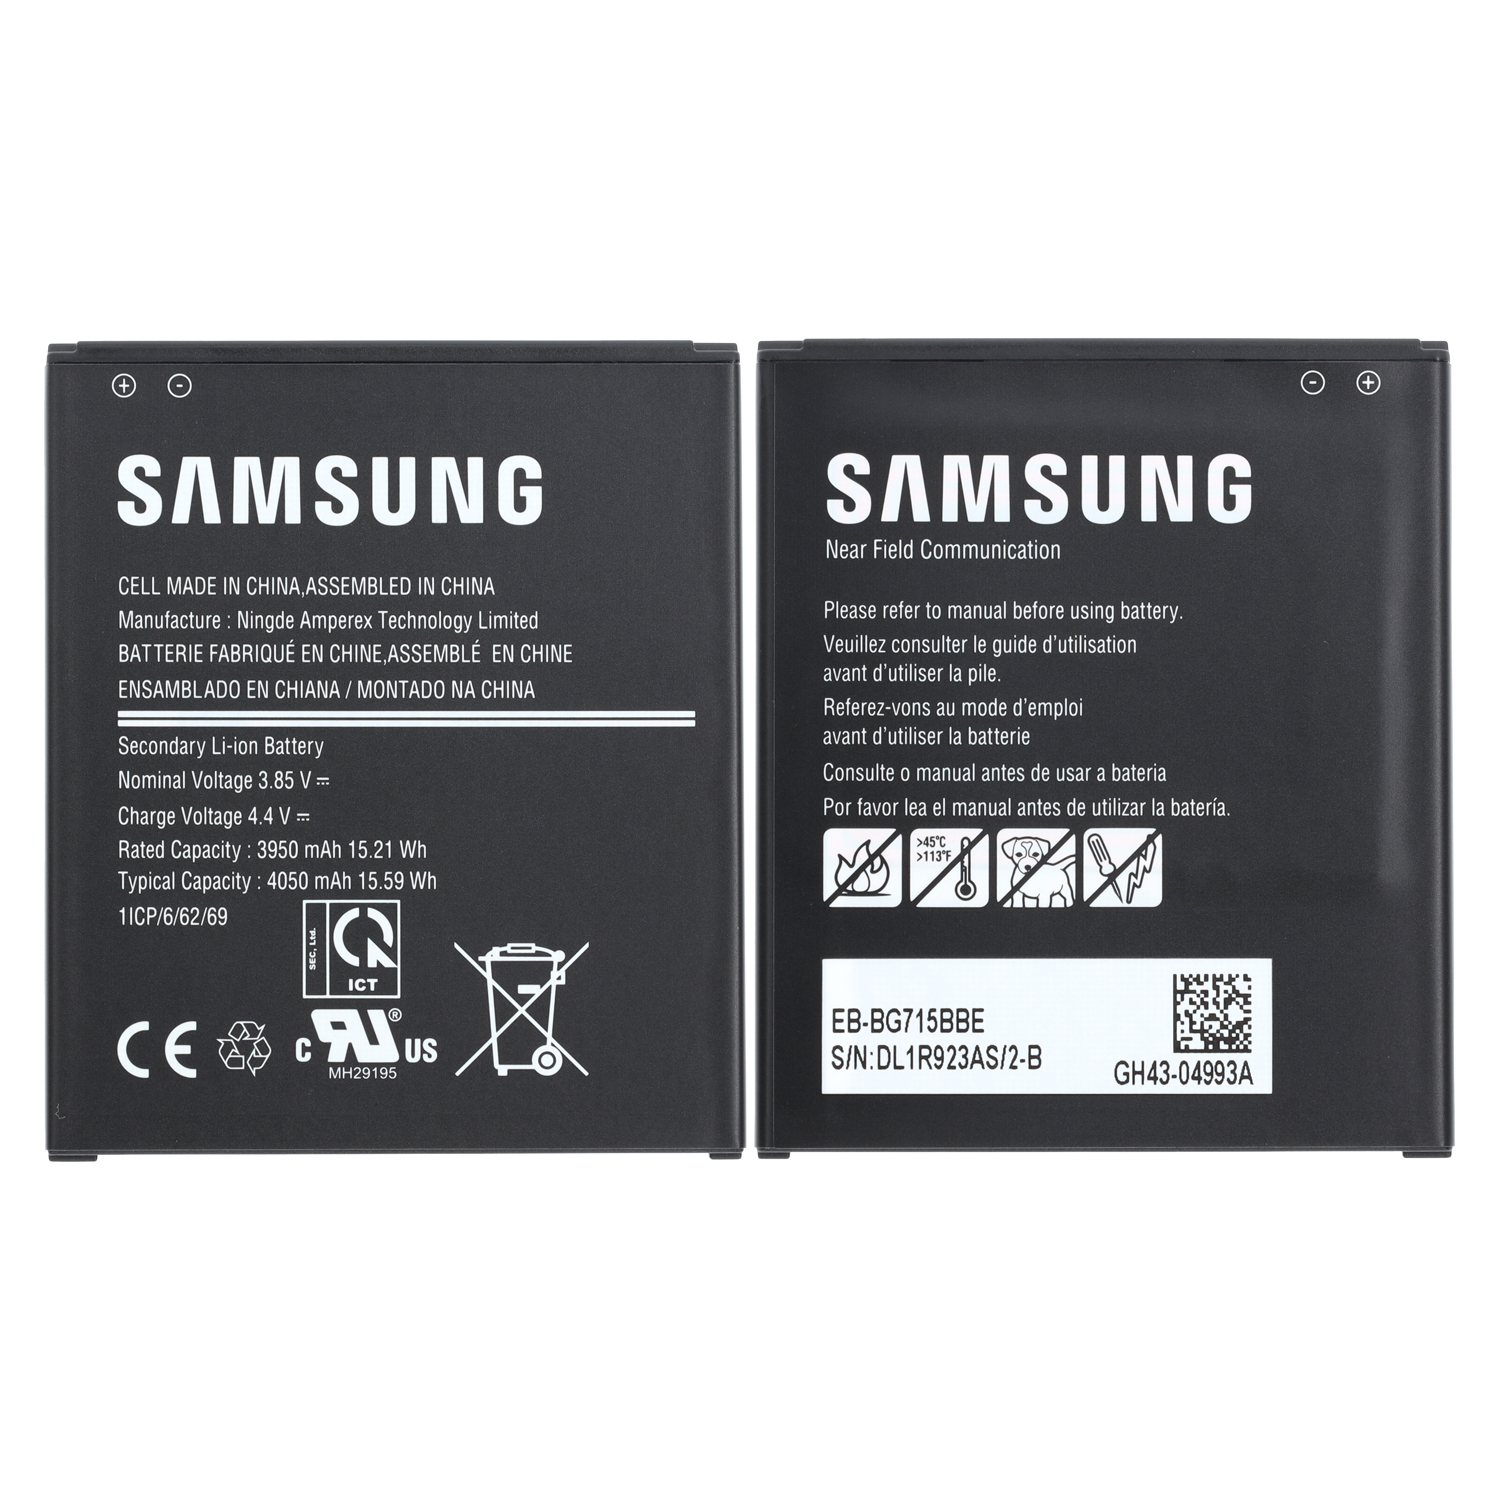 Samsung Galaxy Xcover Pro G715 Battery EB-BG715BBE Sevicepack